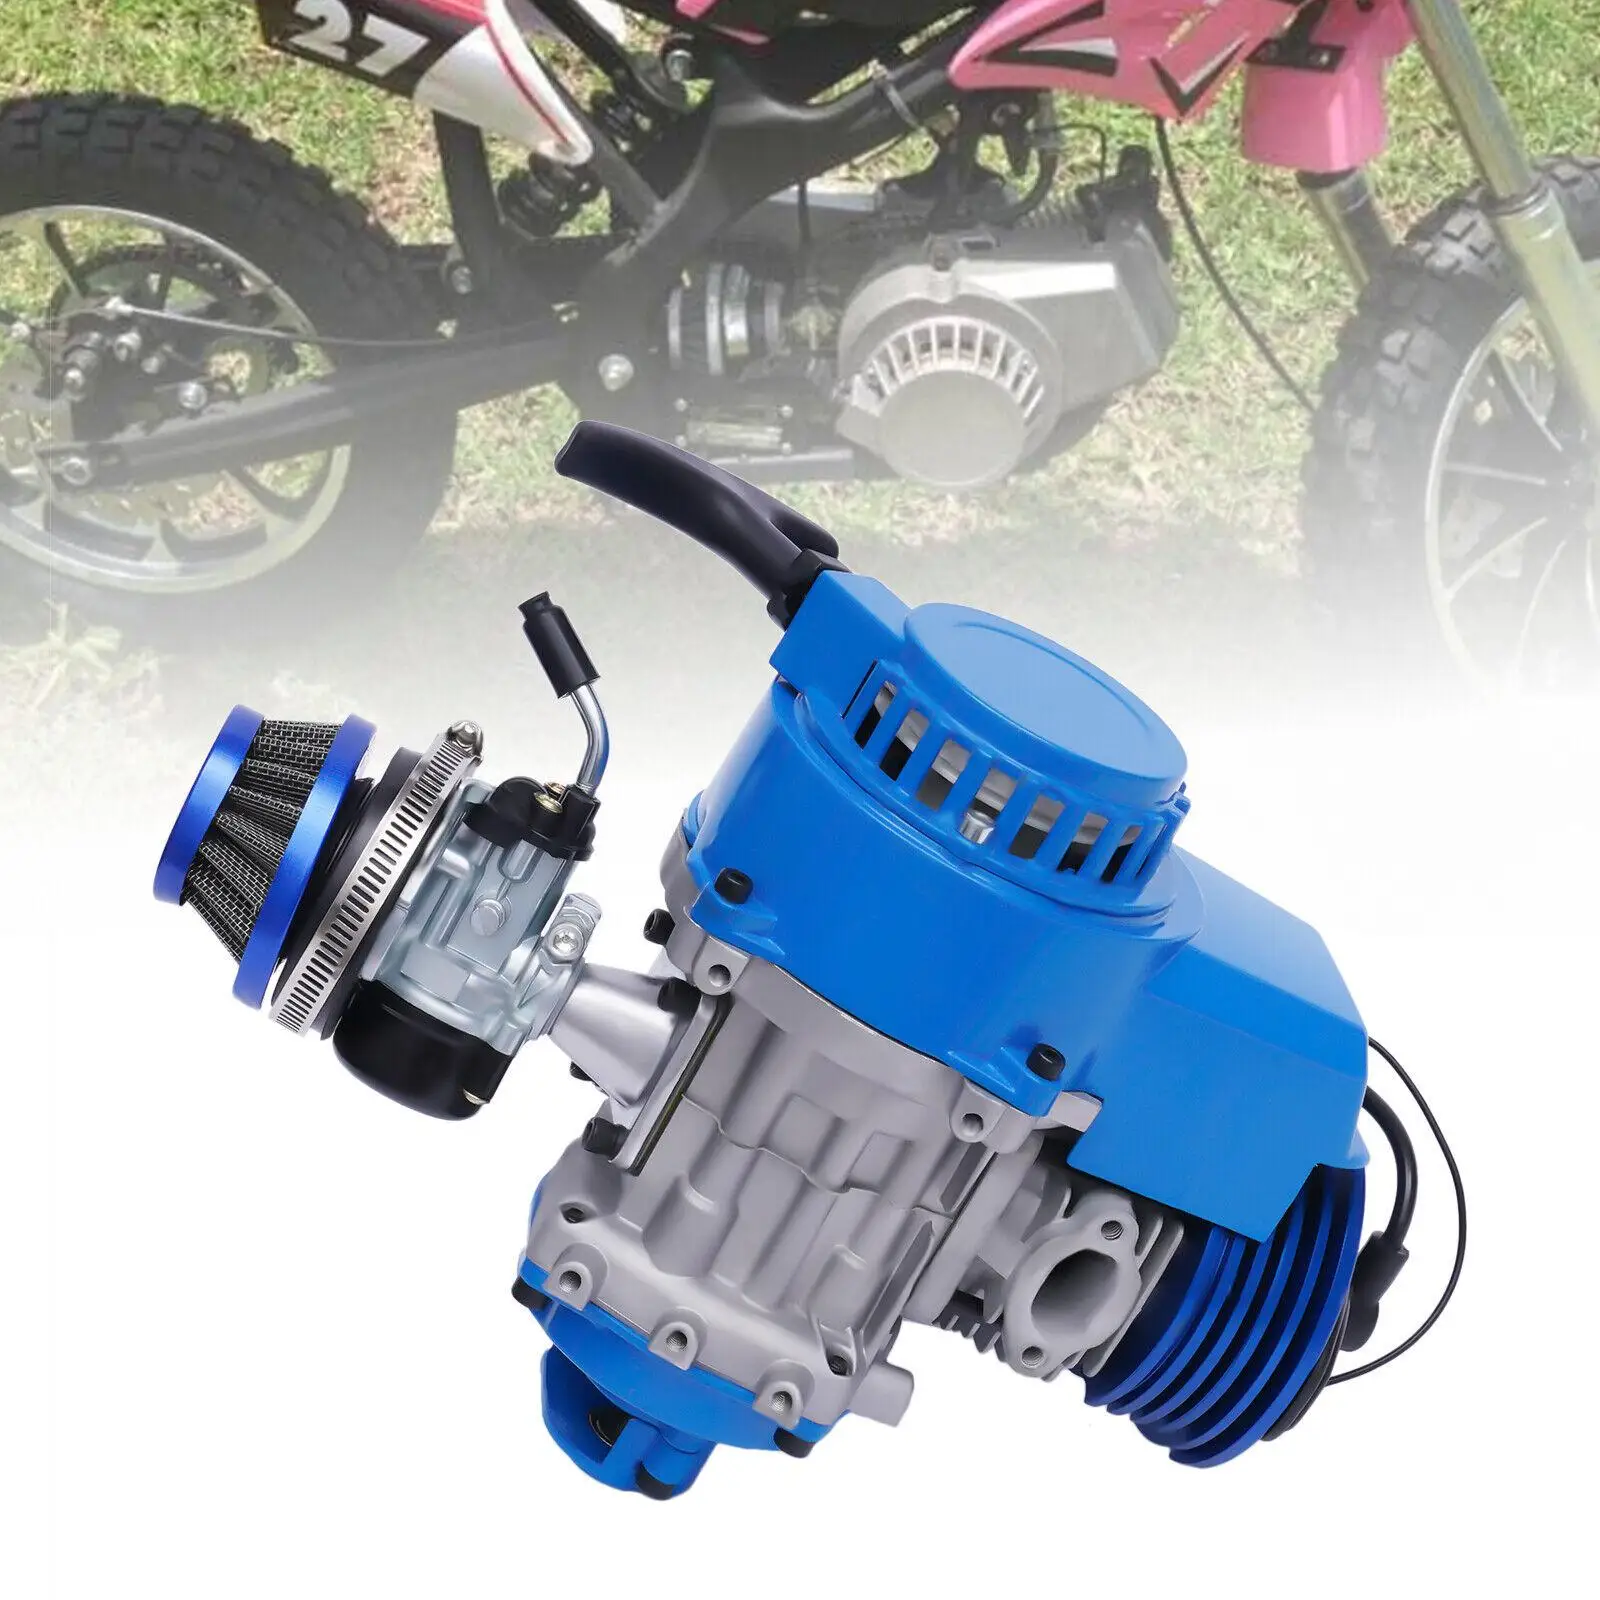 

2 Stroke Racing Engine Motor 49/50cc For Pocket/Quad/Dirt Bike Mini ATV Scooter